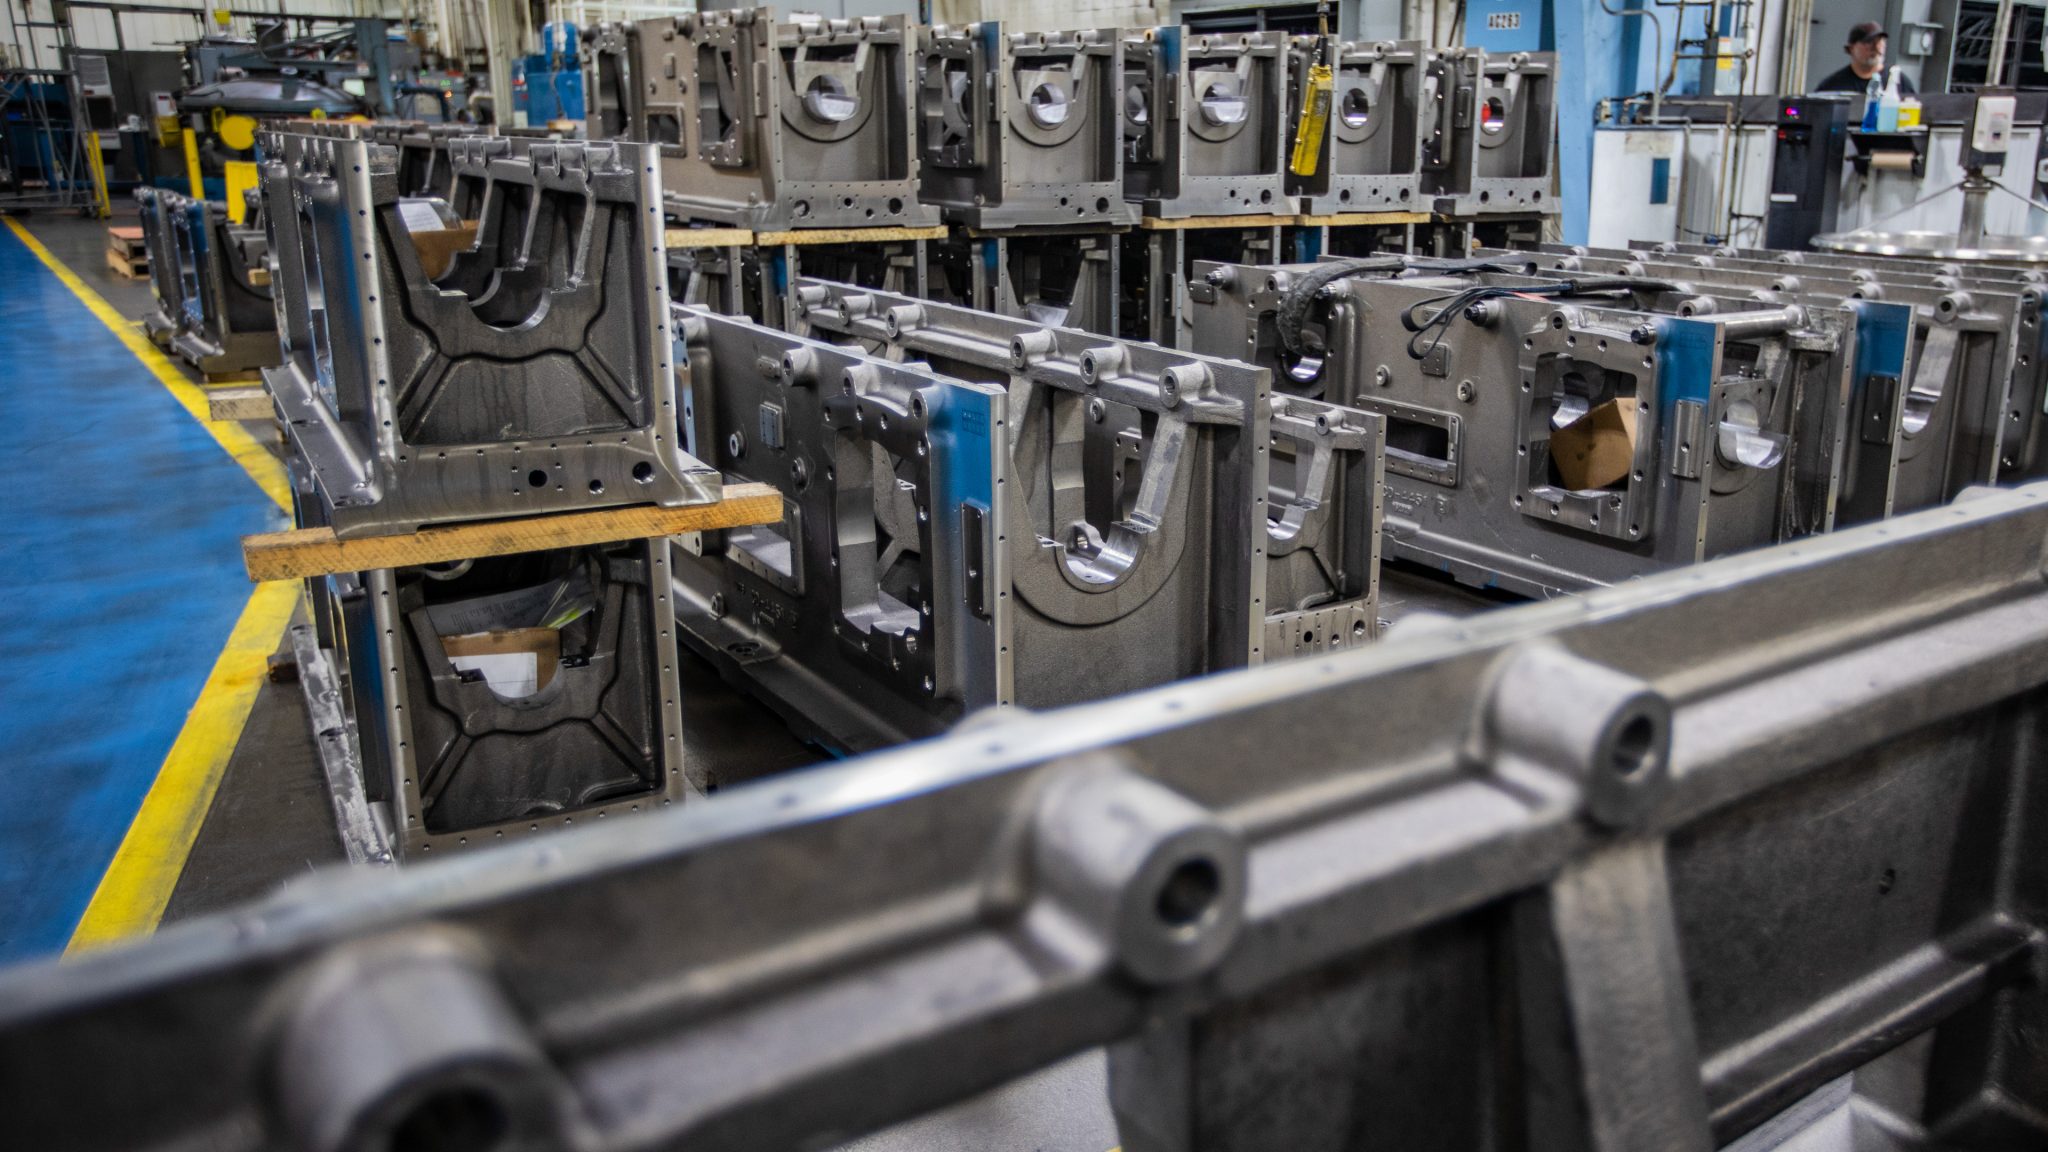 A selection of Ariel compressor frames on the machine shop floor